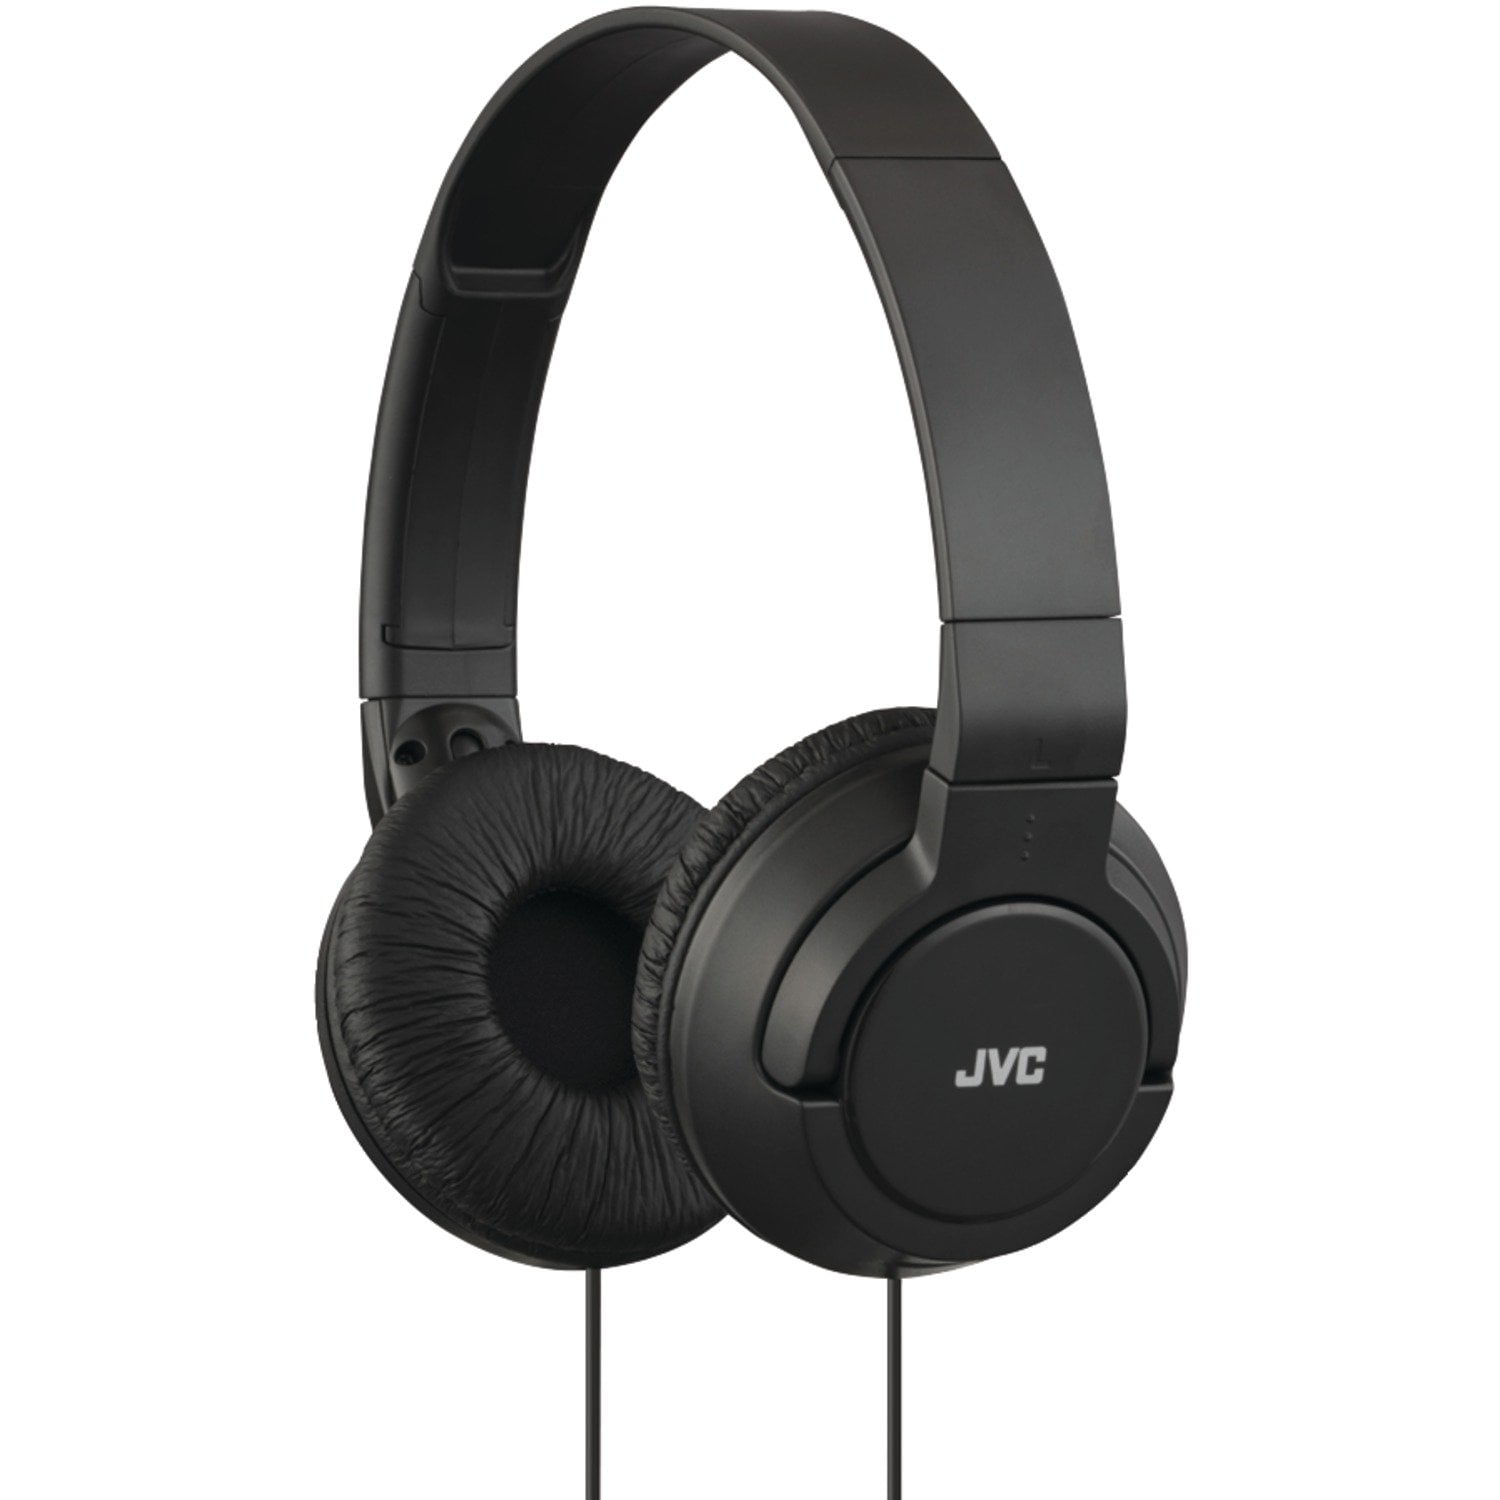 JVC HAS180-B-K Lightweight On-Ear Headphones (Black) - Walmart.com